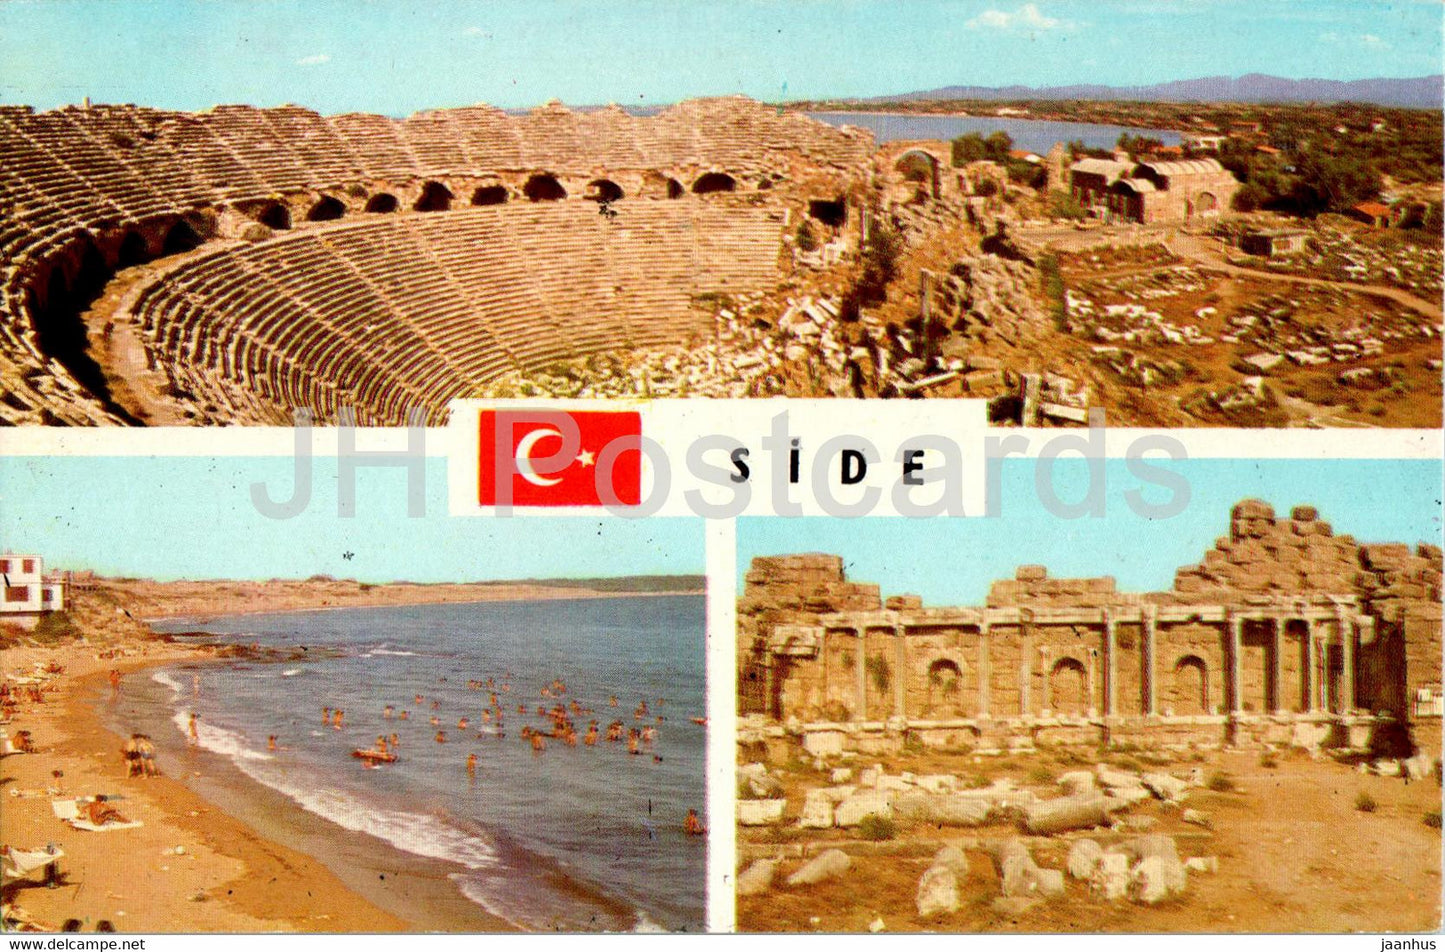 Side - Tarih Cenneti - Side den gorunusler - ancient world - multiview - 107 - Turkey - used - JH Postcards